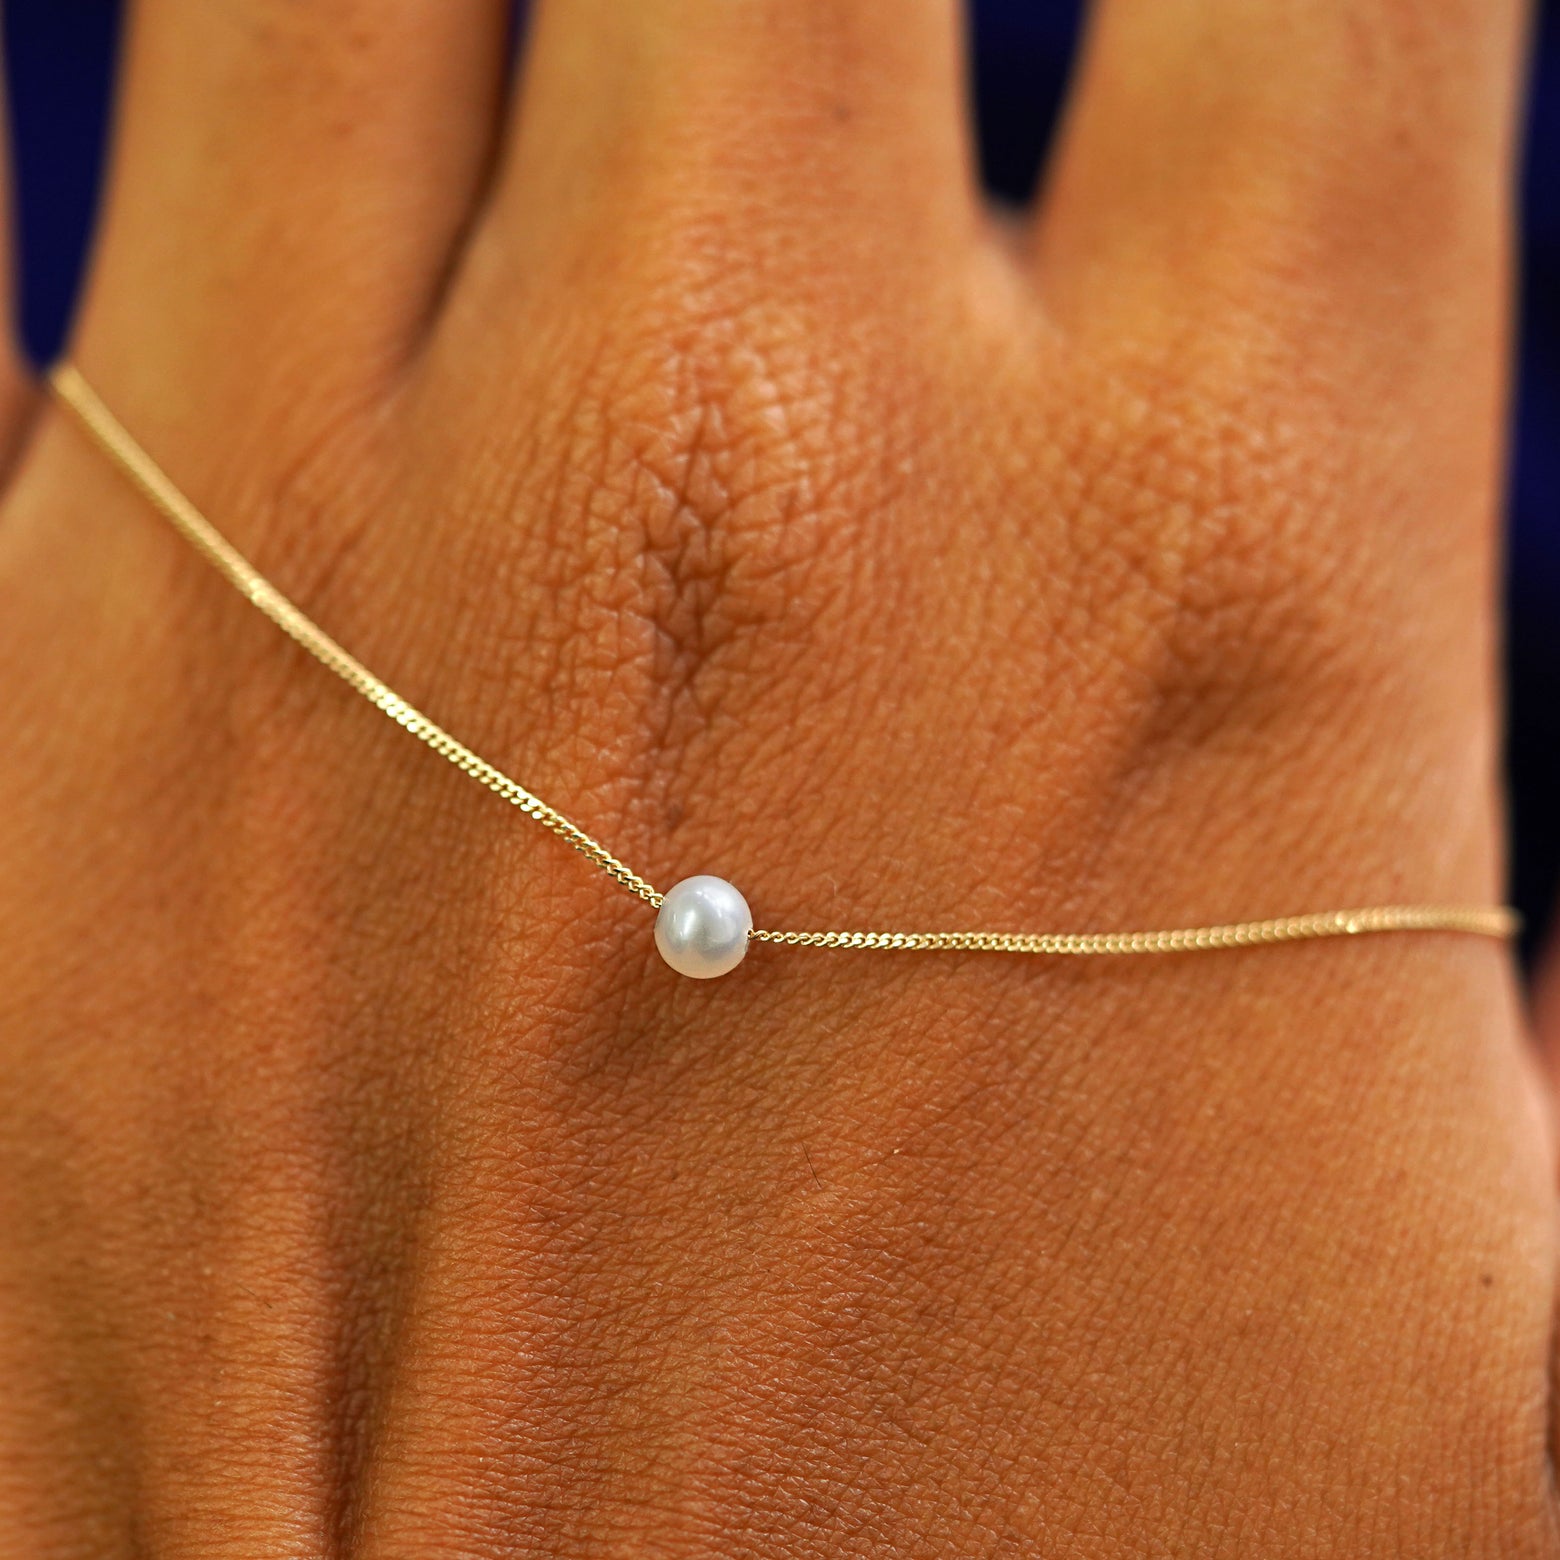 A 4mm pearl slide bracelet resting on the back of a model's hand